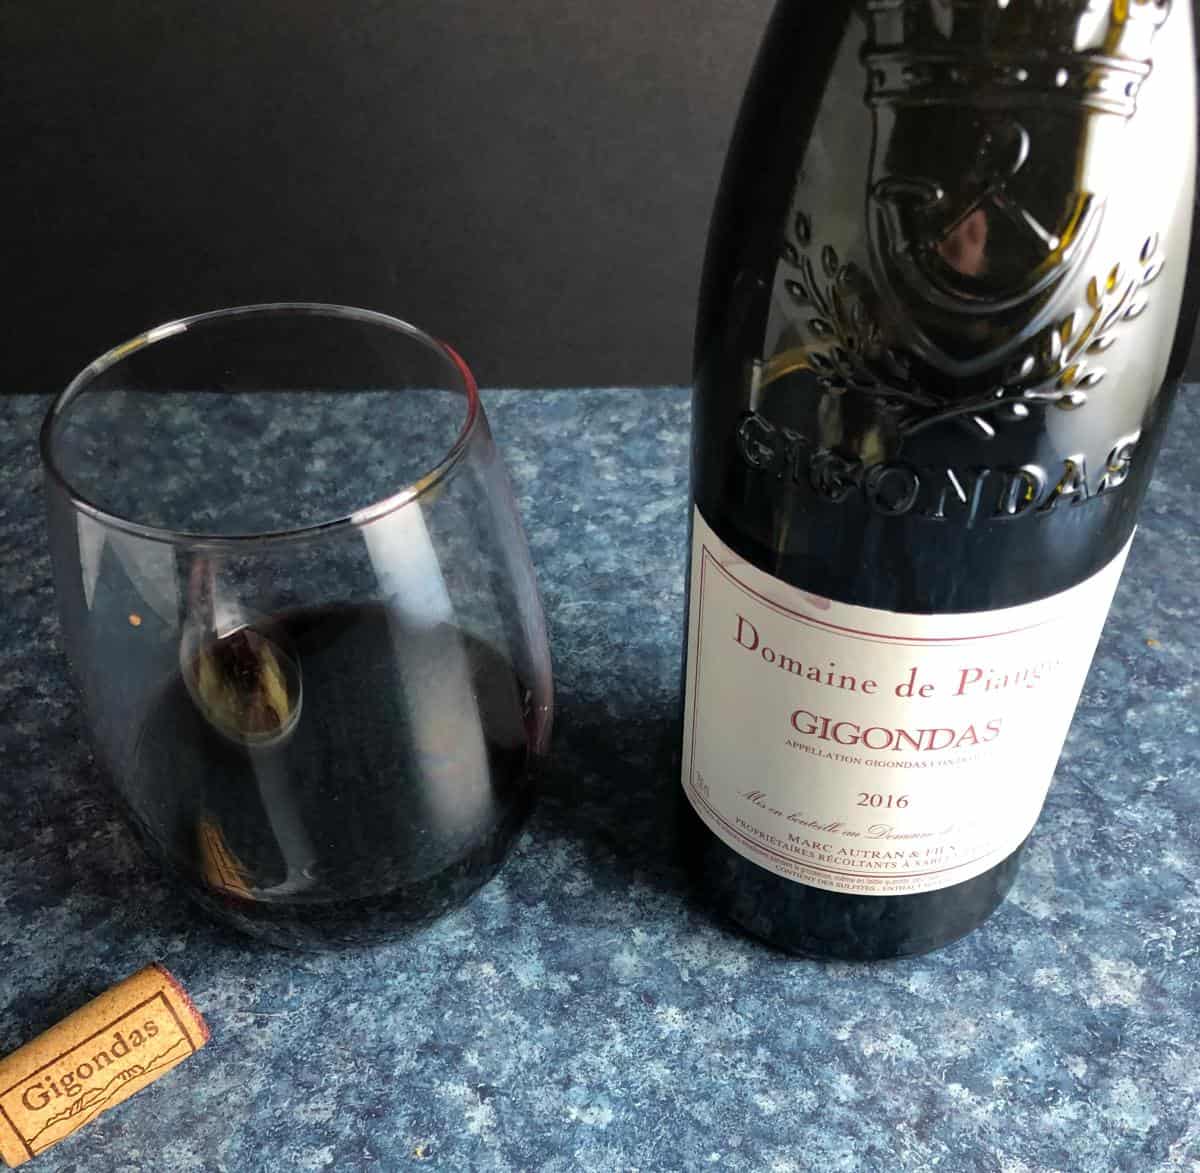 Bottle of Domaine de Piaugier red wine from Gigondas.